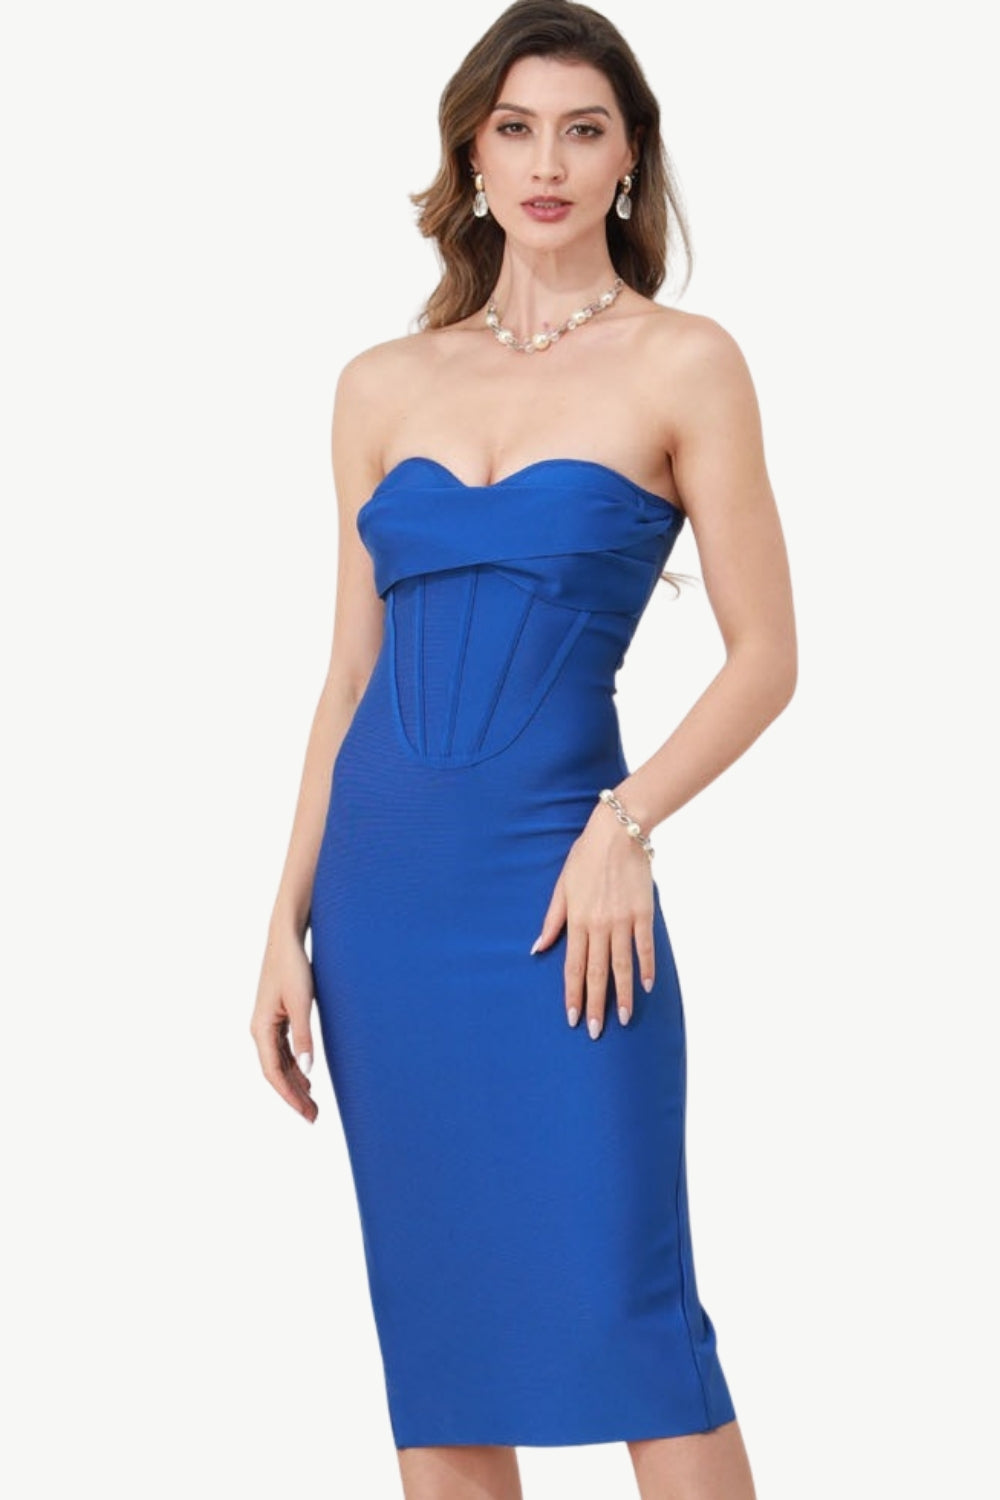 Kjæreste Royal Blue Corset Party kjole